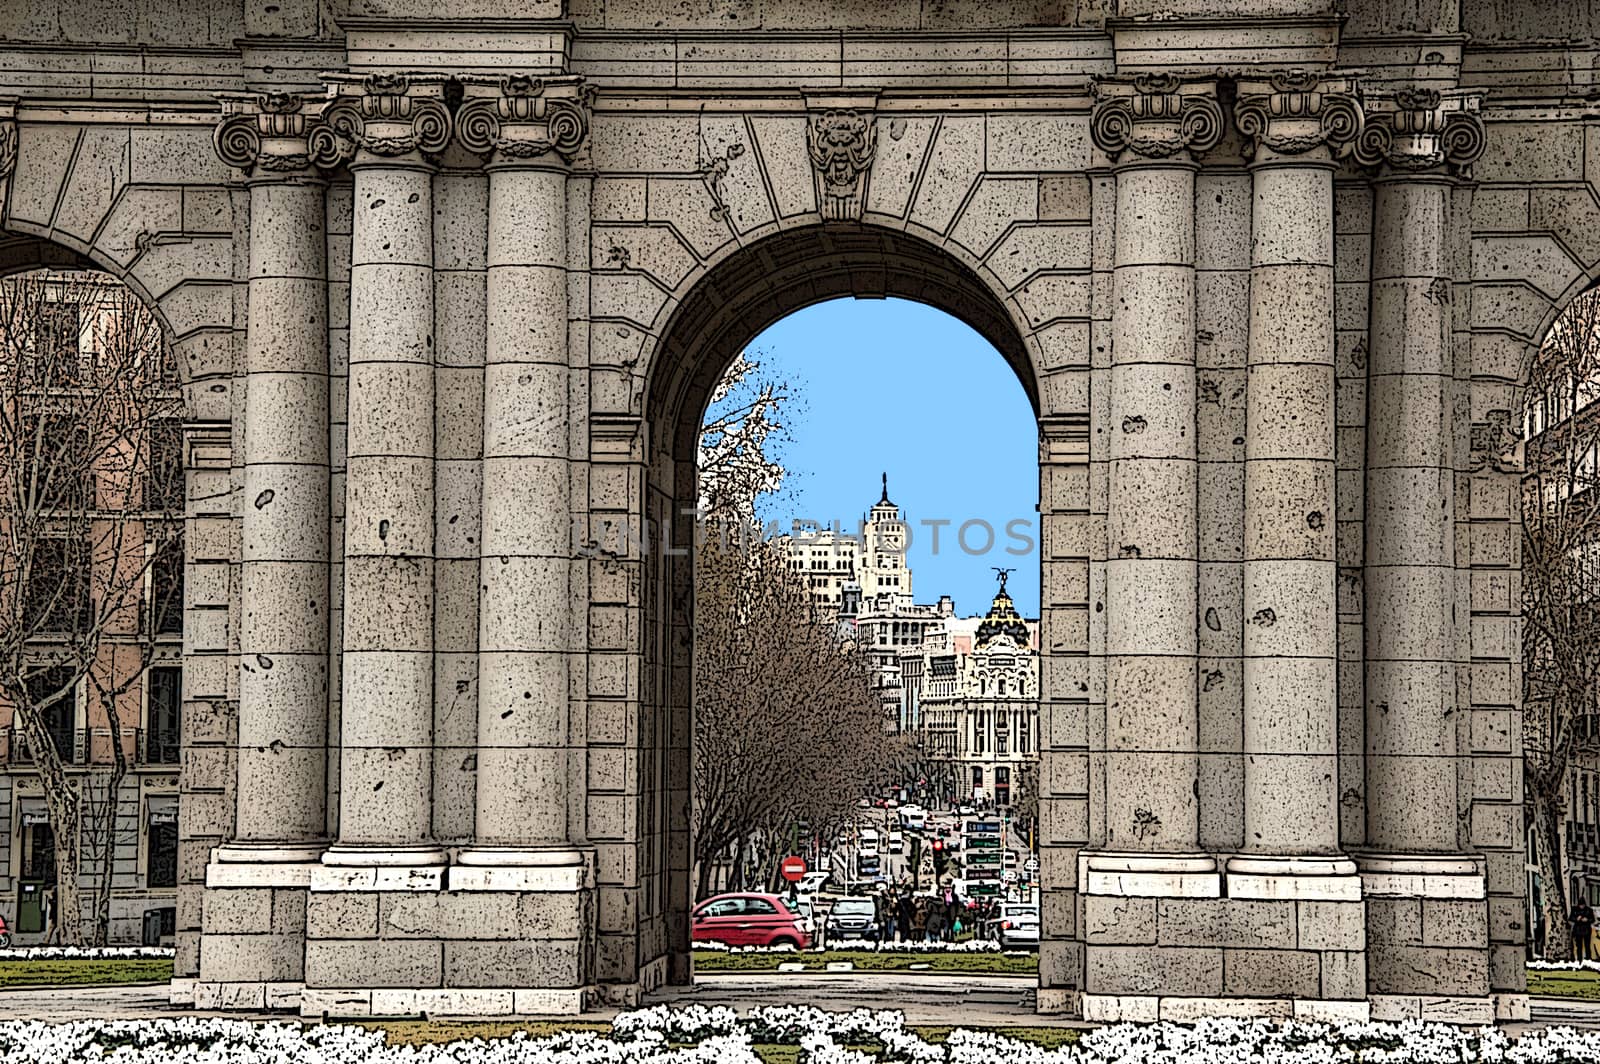 Puerta de alcala Madrid by enriscapes